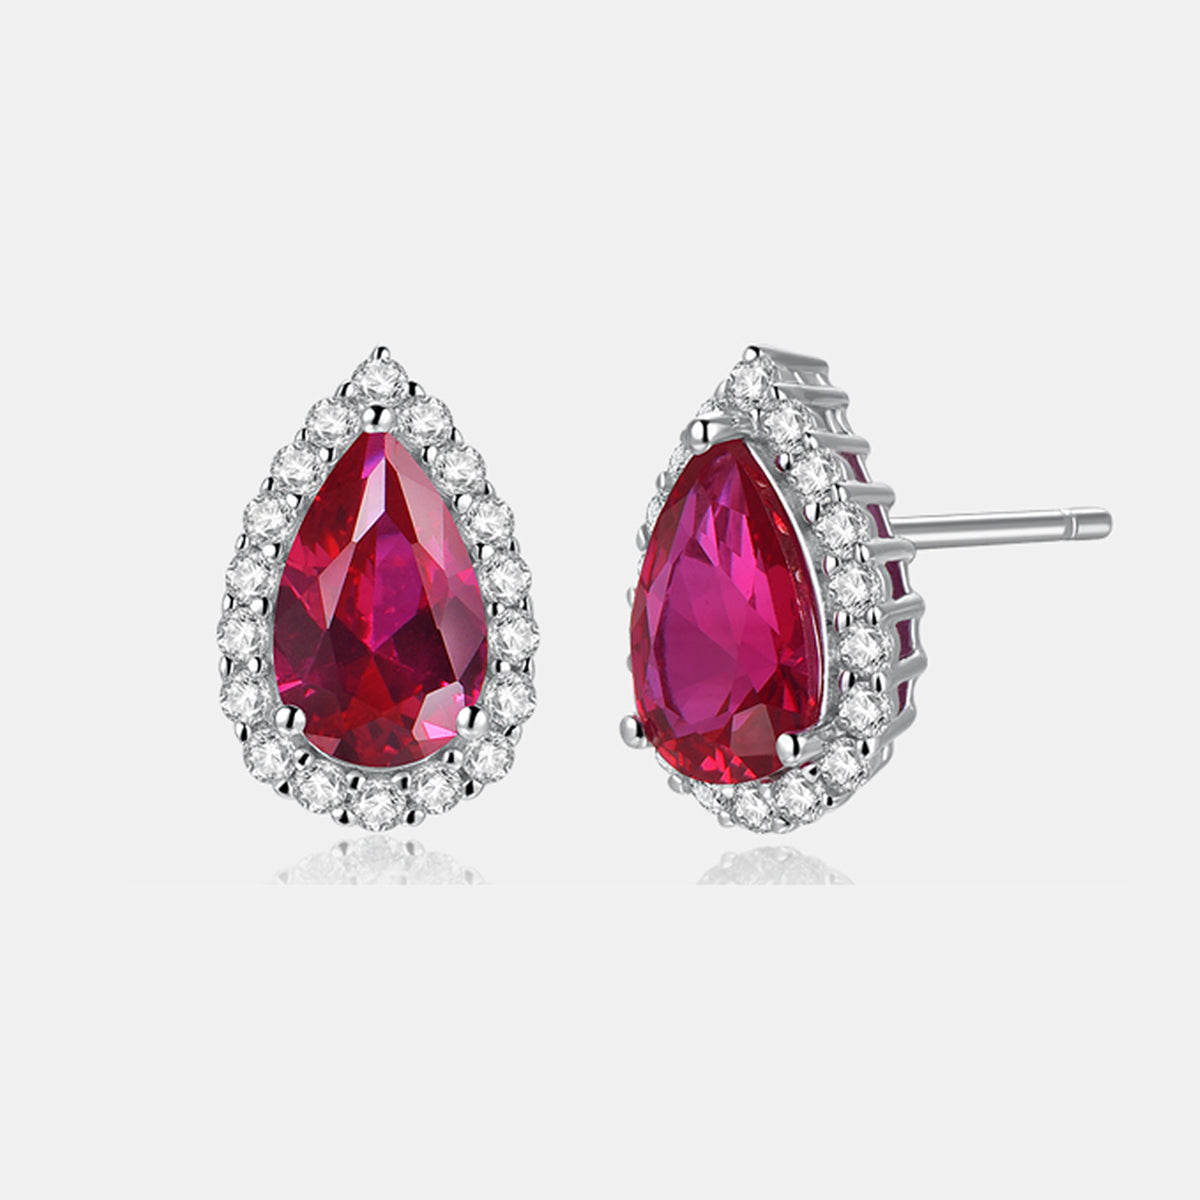 Colored Gemstones Jewelry